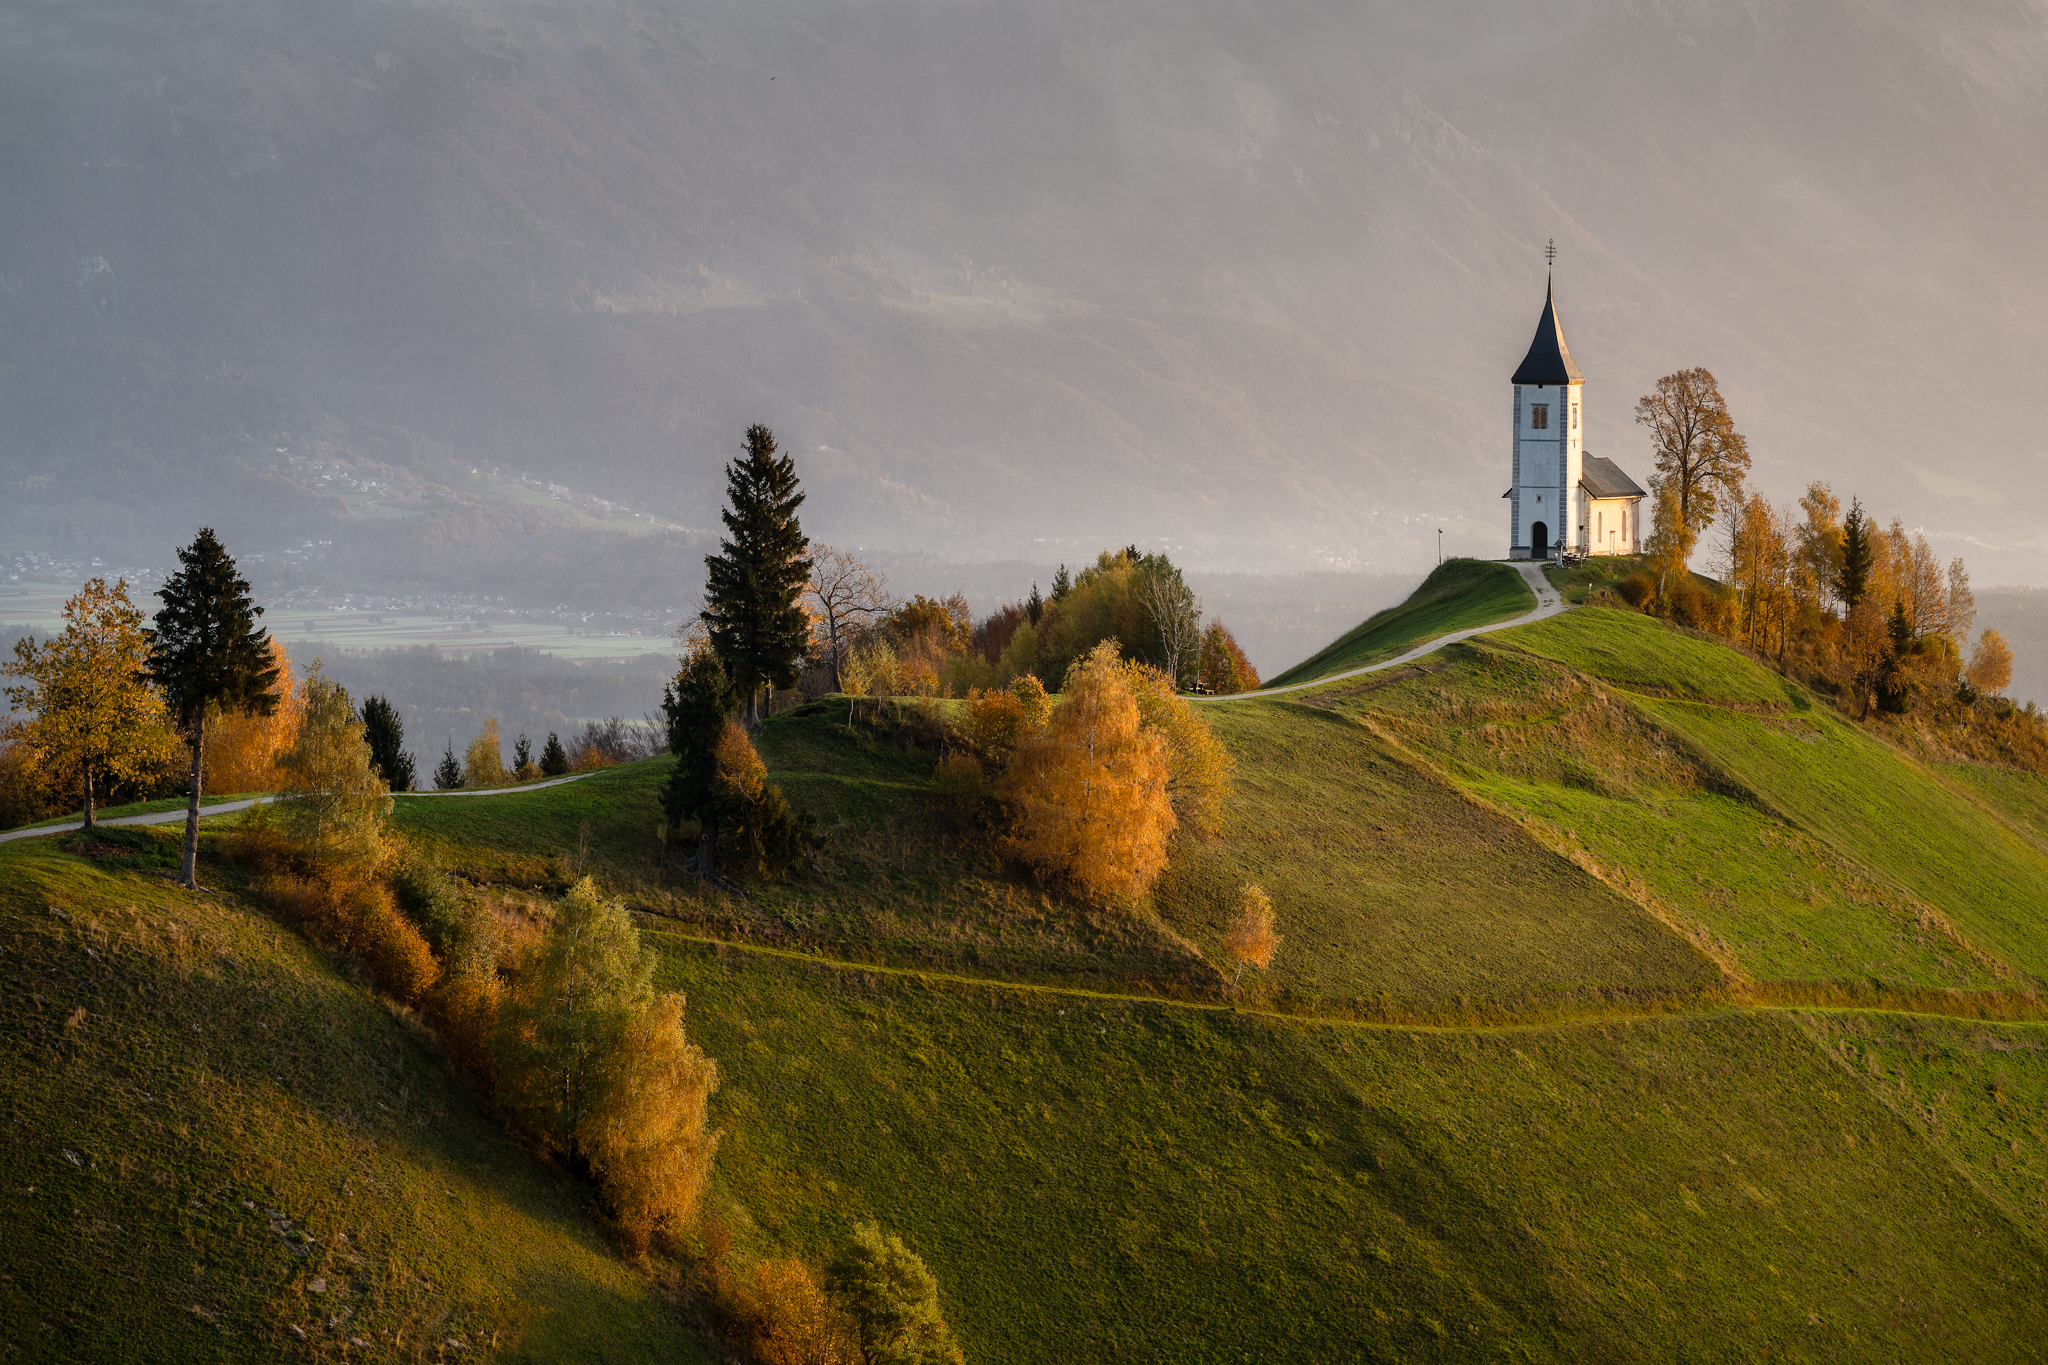 Autumn in Slovenia...